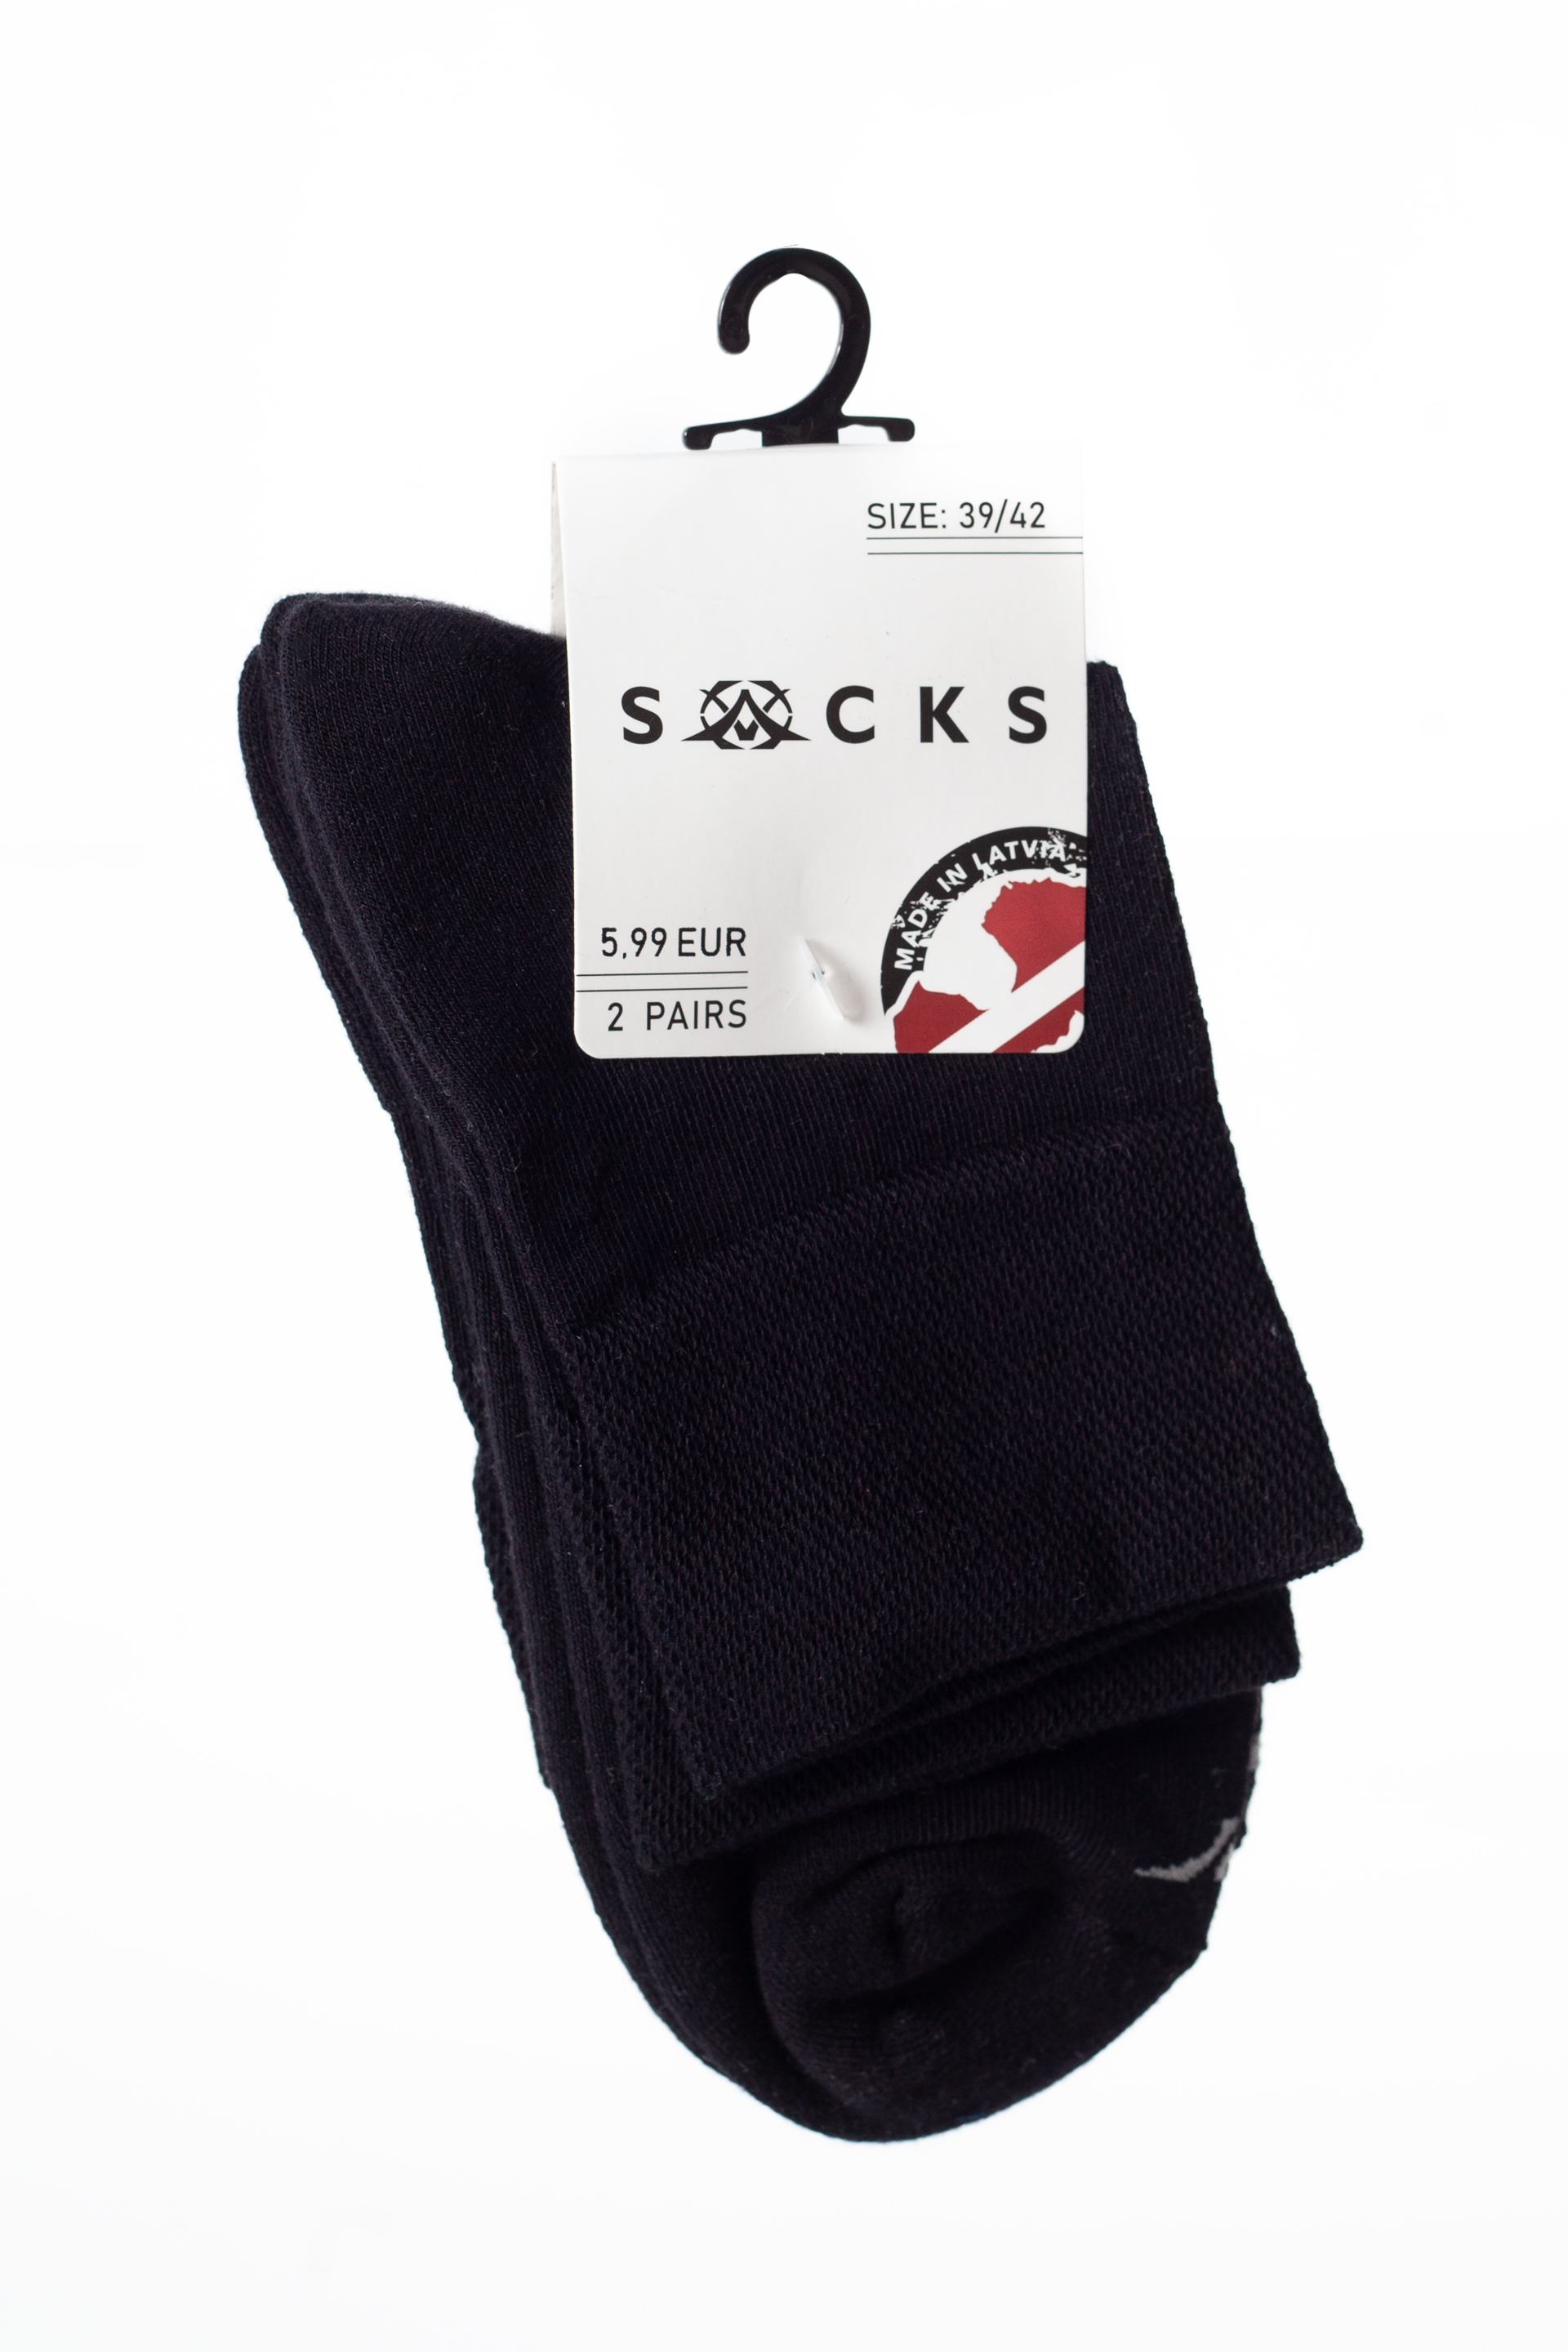 Socks X JEANS 12S41-2P-BLACK